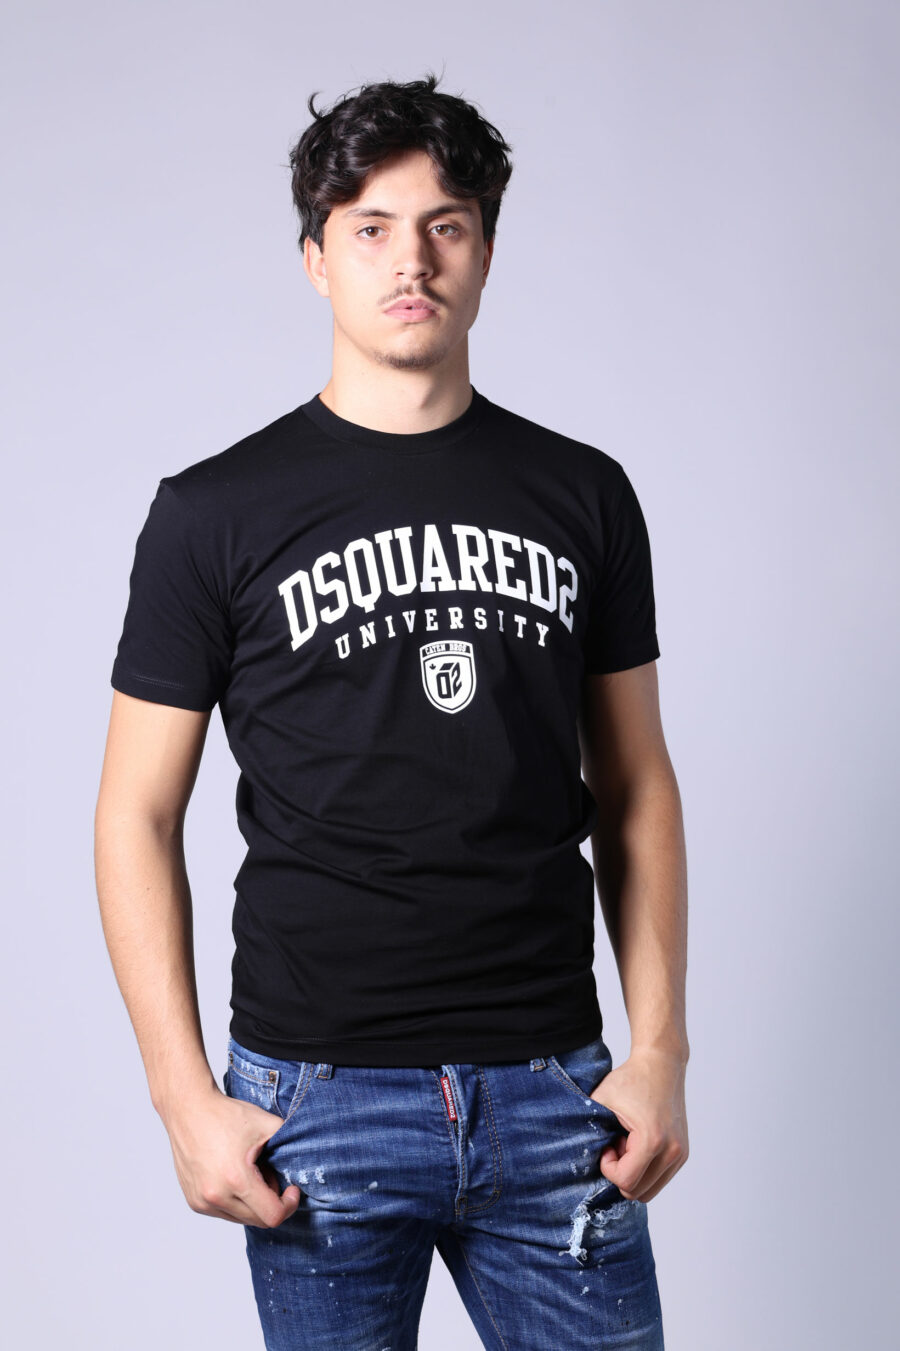 T-shirt preta com maxilogo "university" branco - Untitled Catalog 05239